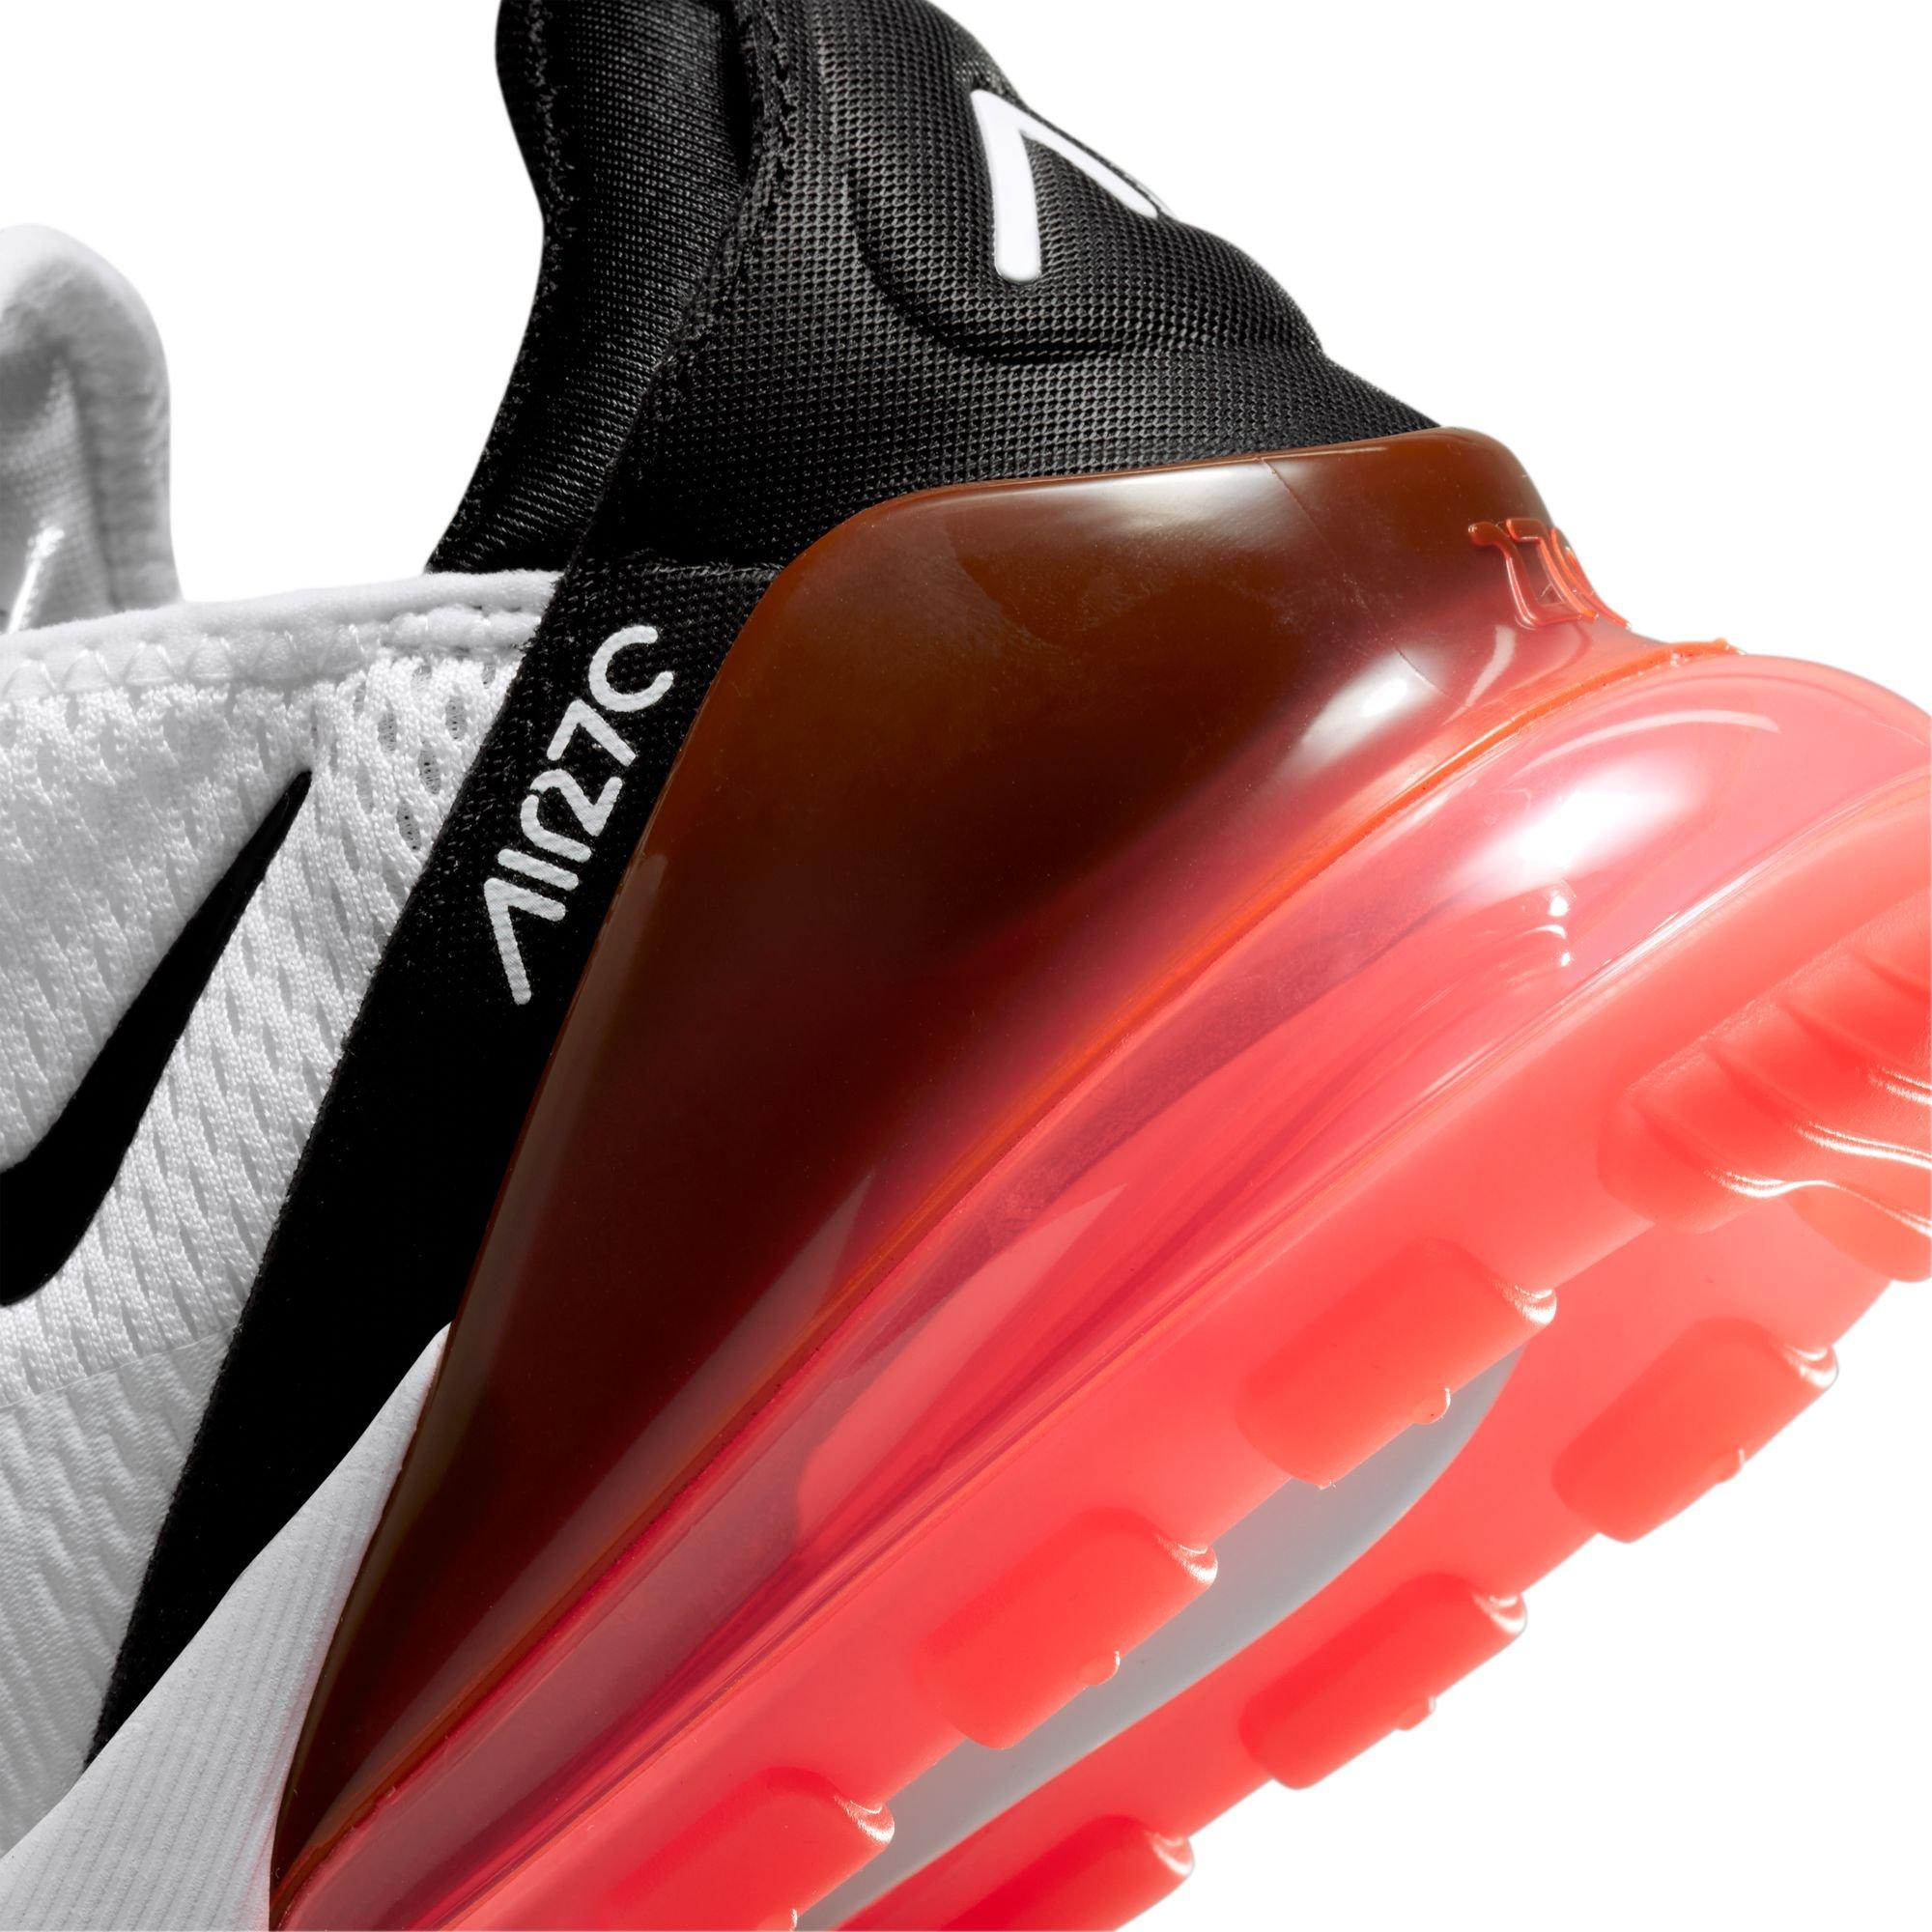 stil bezig bout Nike Air Max 270 "White/Black/Hot Punch" Men's Shoe